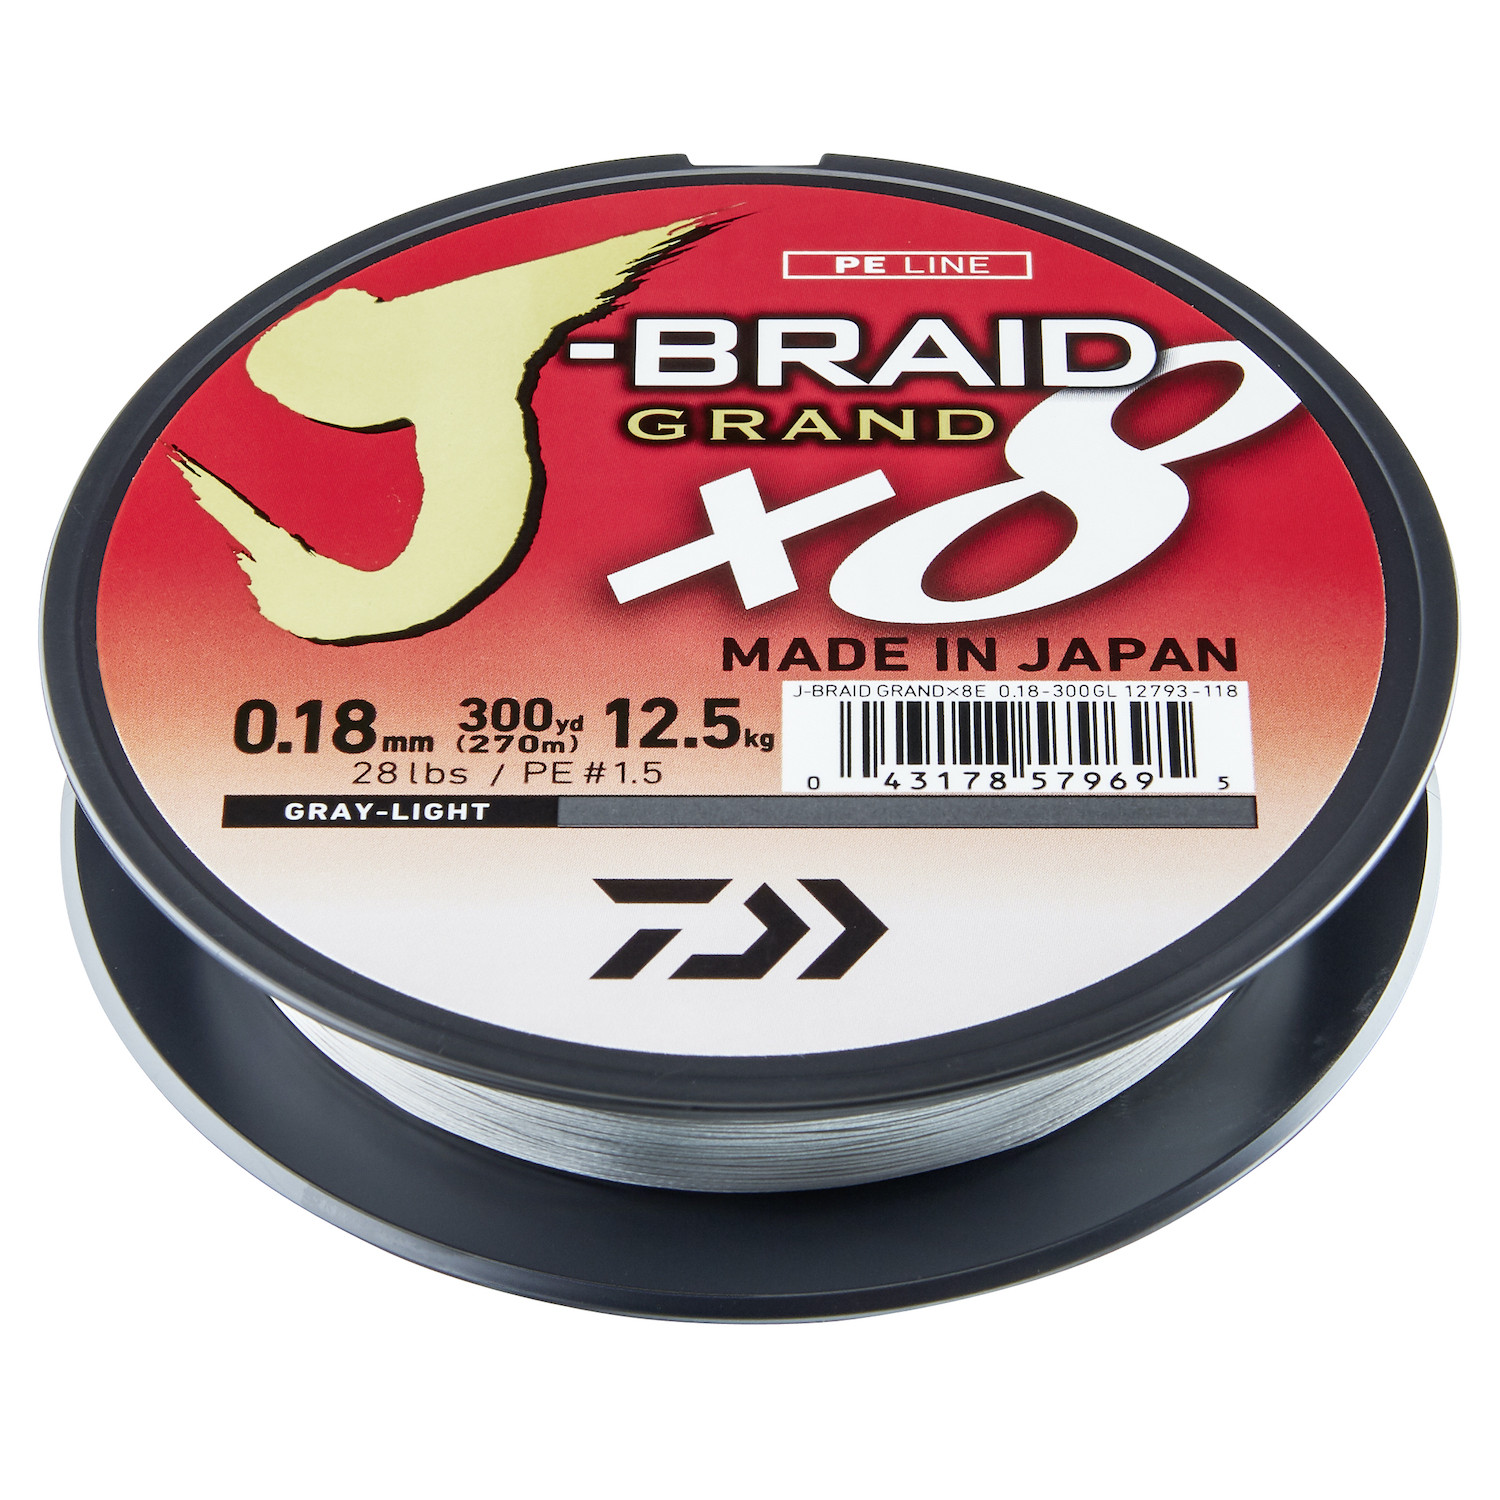 J-Braid Grand X8